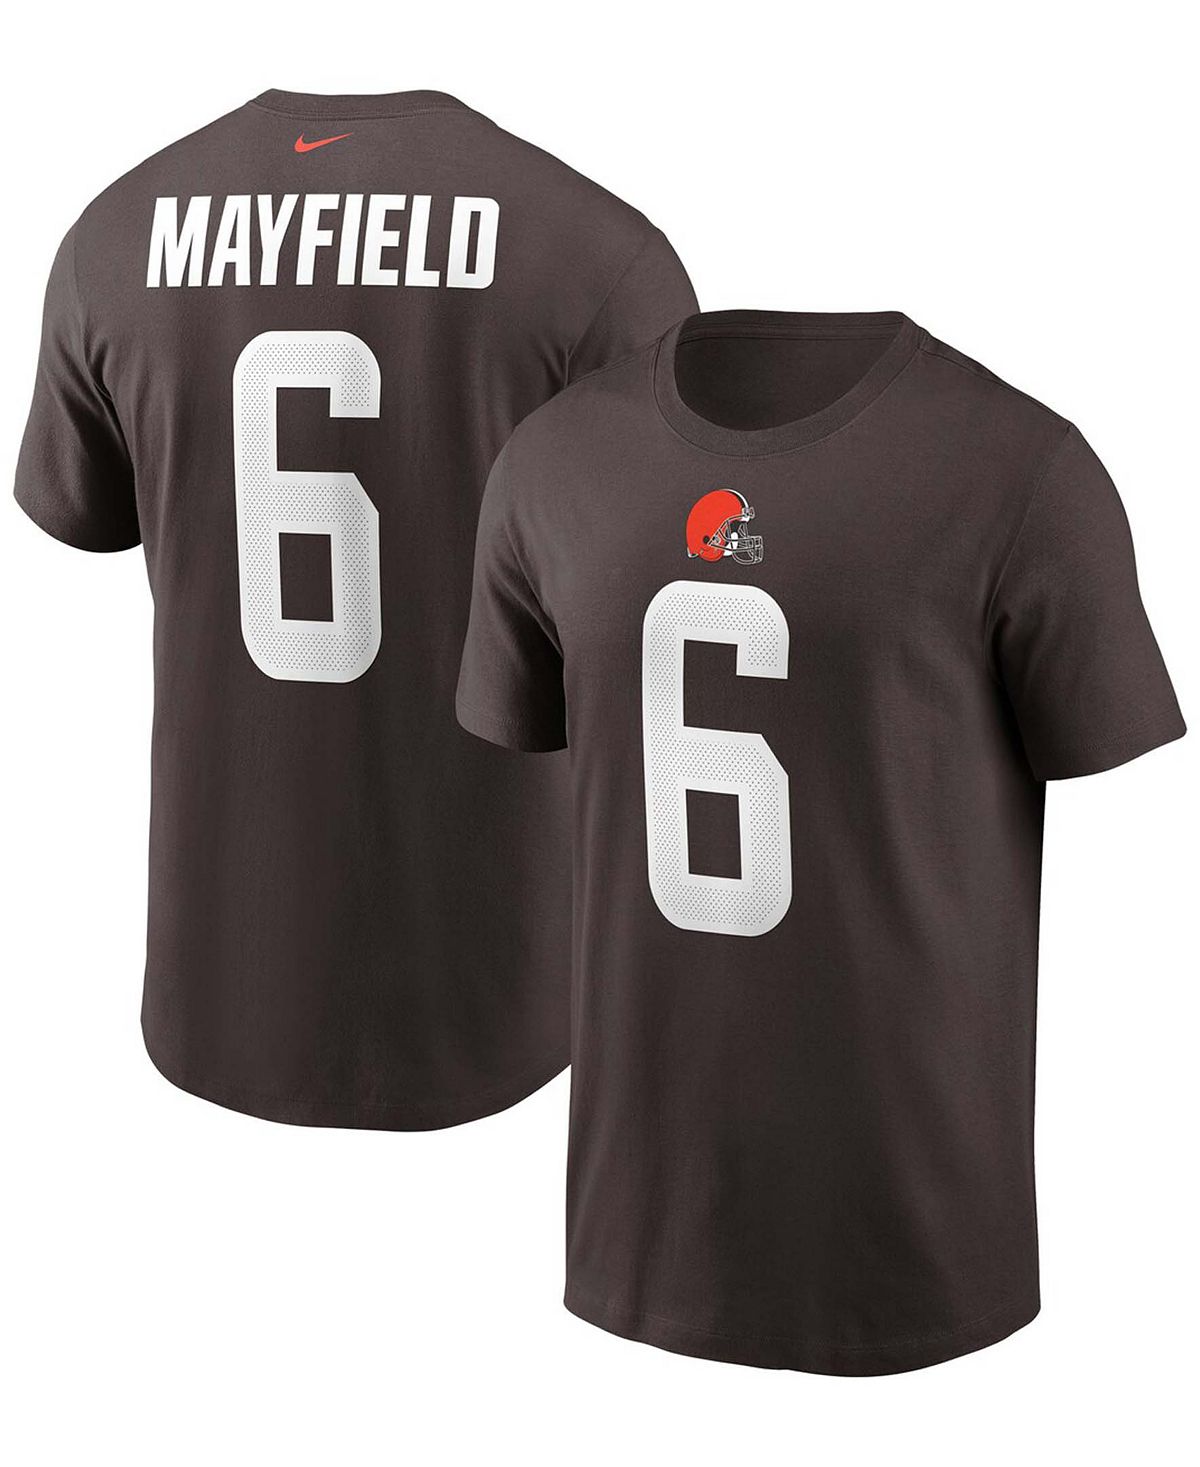 Мужская футболка с именем и номером Cleveland Browns Baker Mayfield Nike mayfield k the parentations